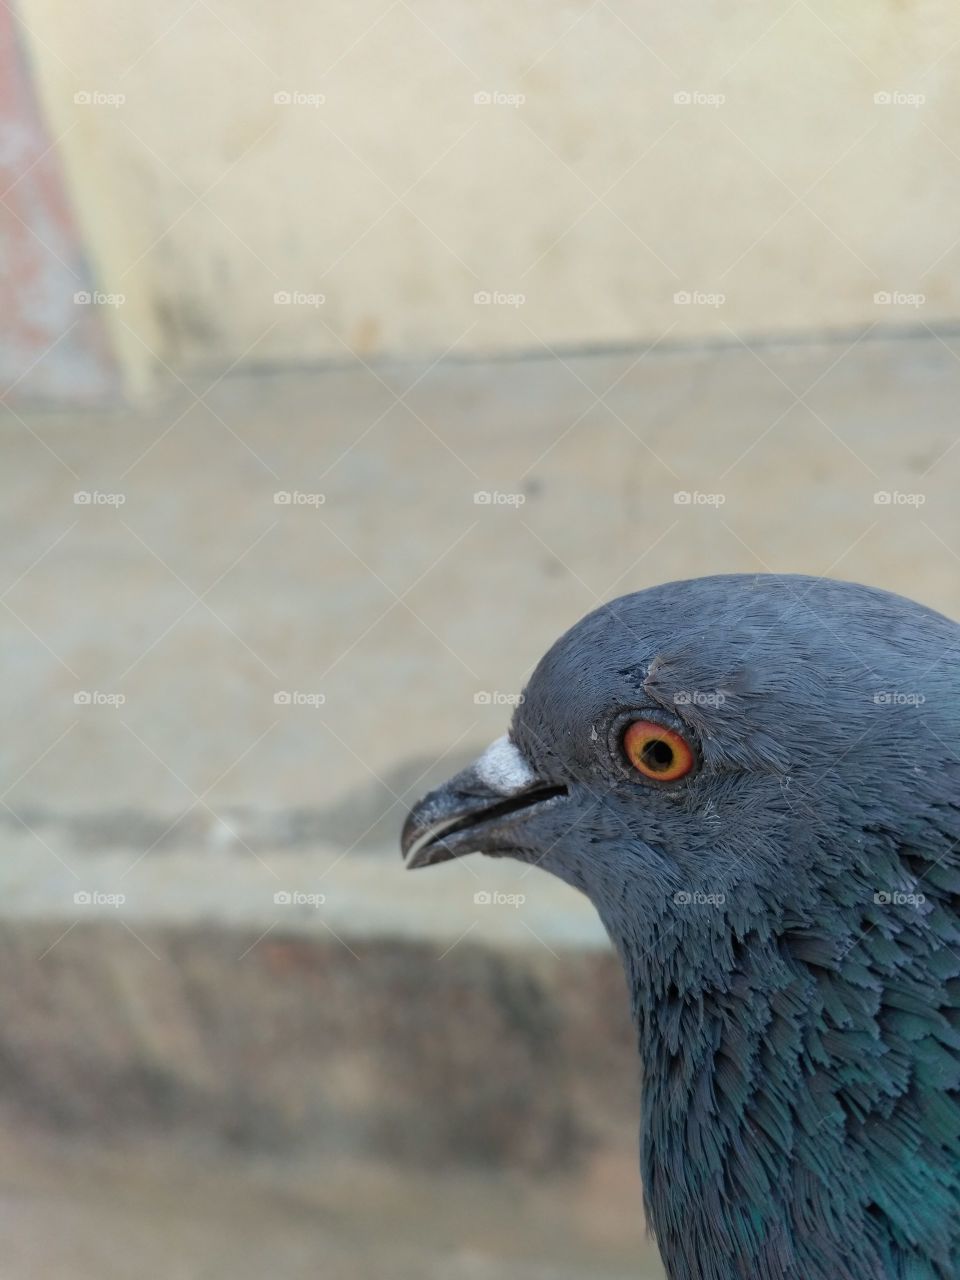 pigeon eye